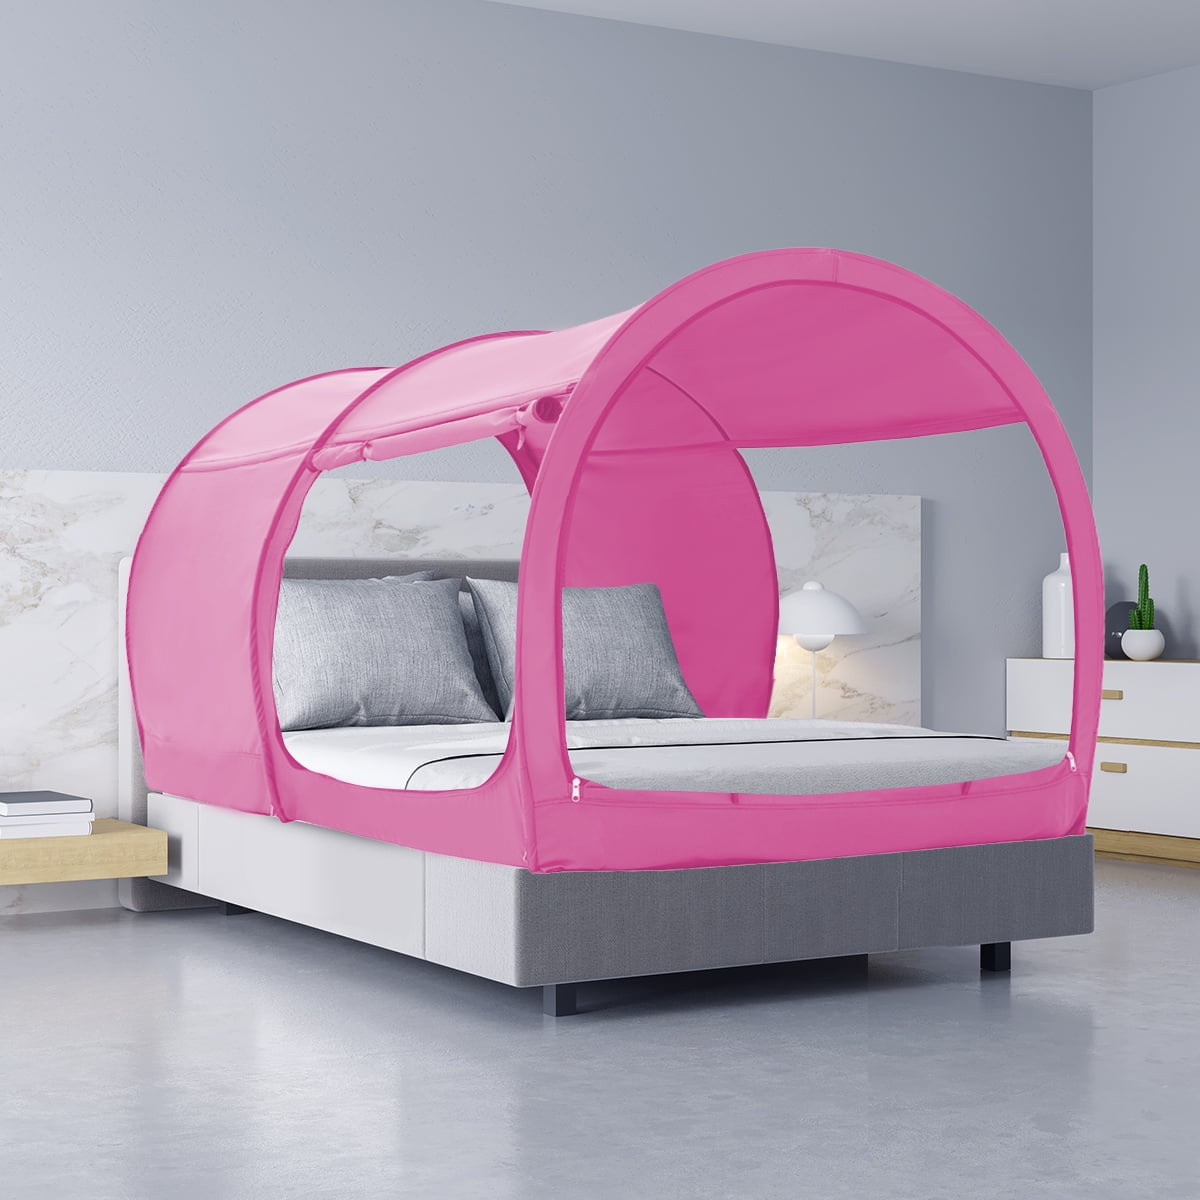 Alvantor Bed Tent Pop Up Canopy Full, Star Wars Bunk Bed Tent